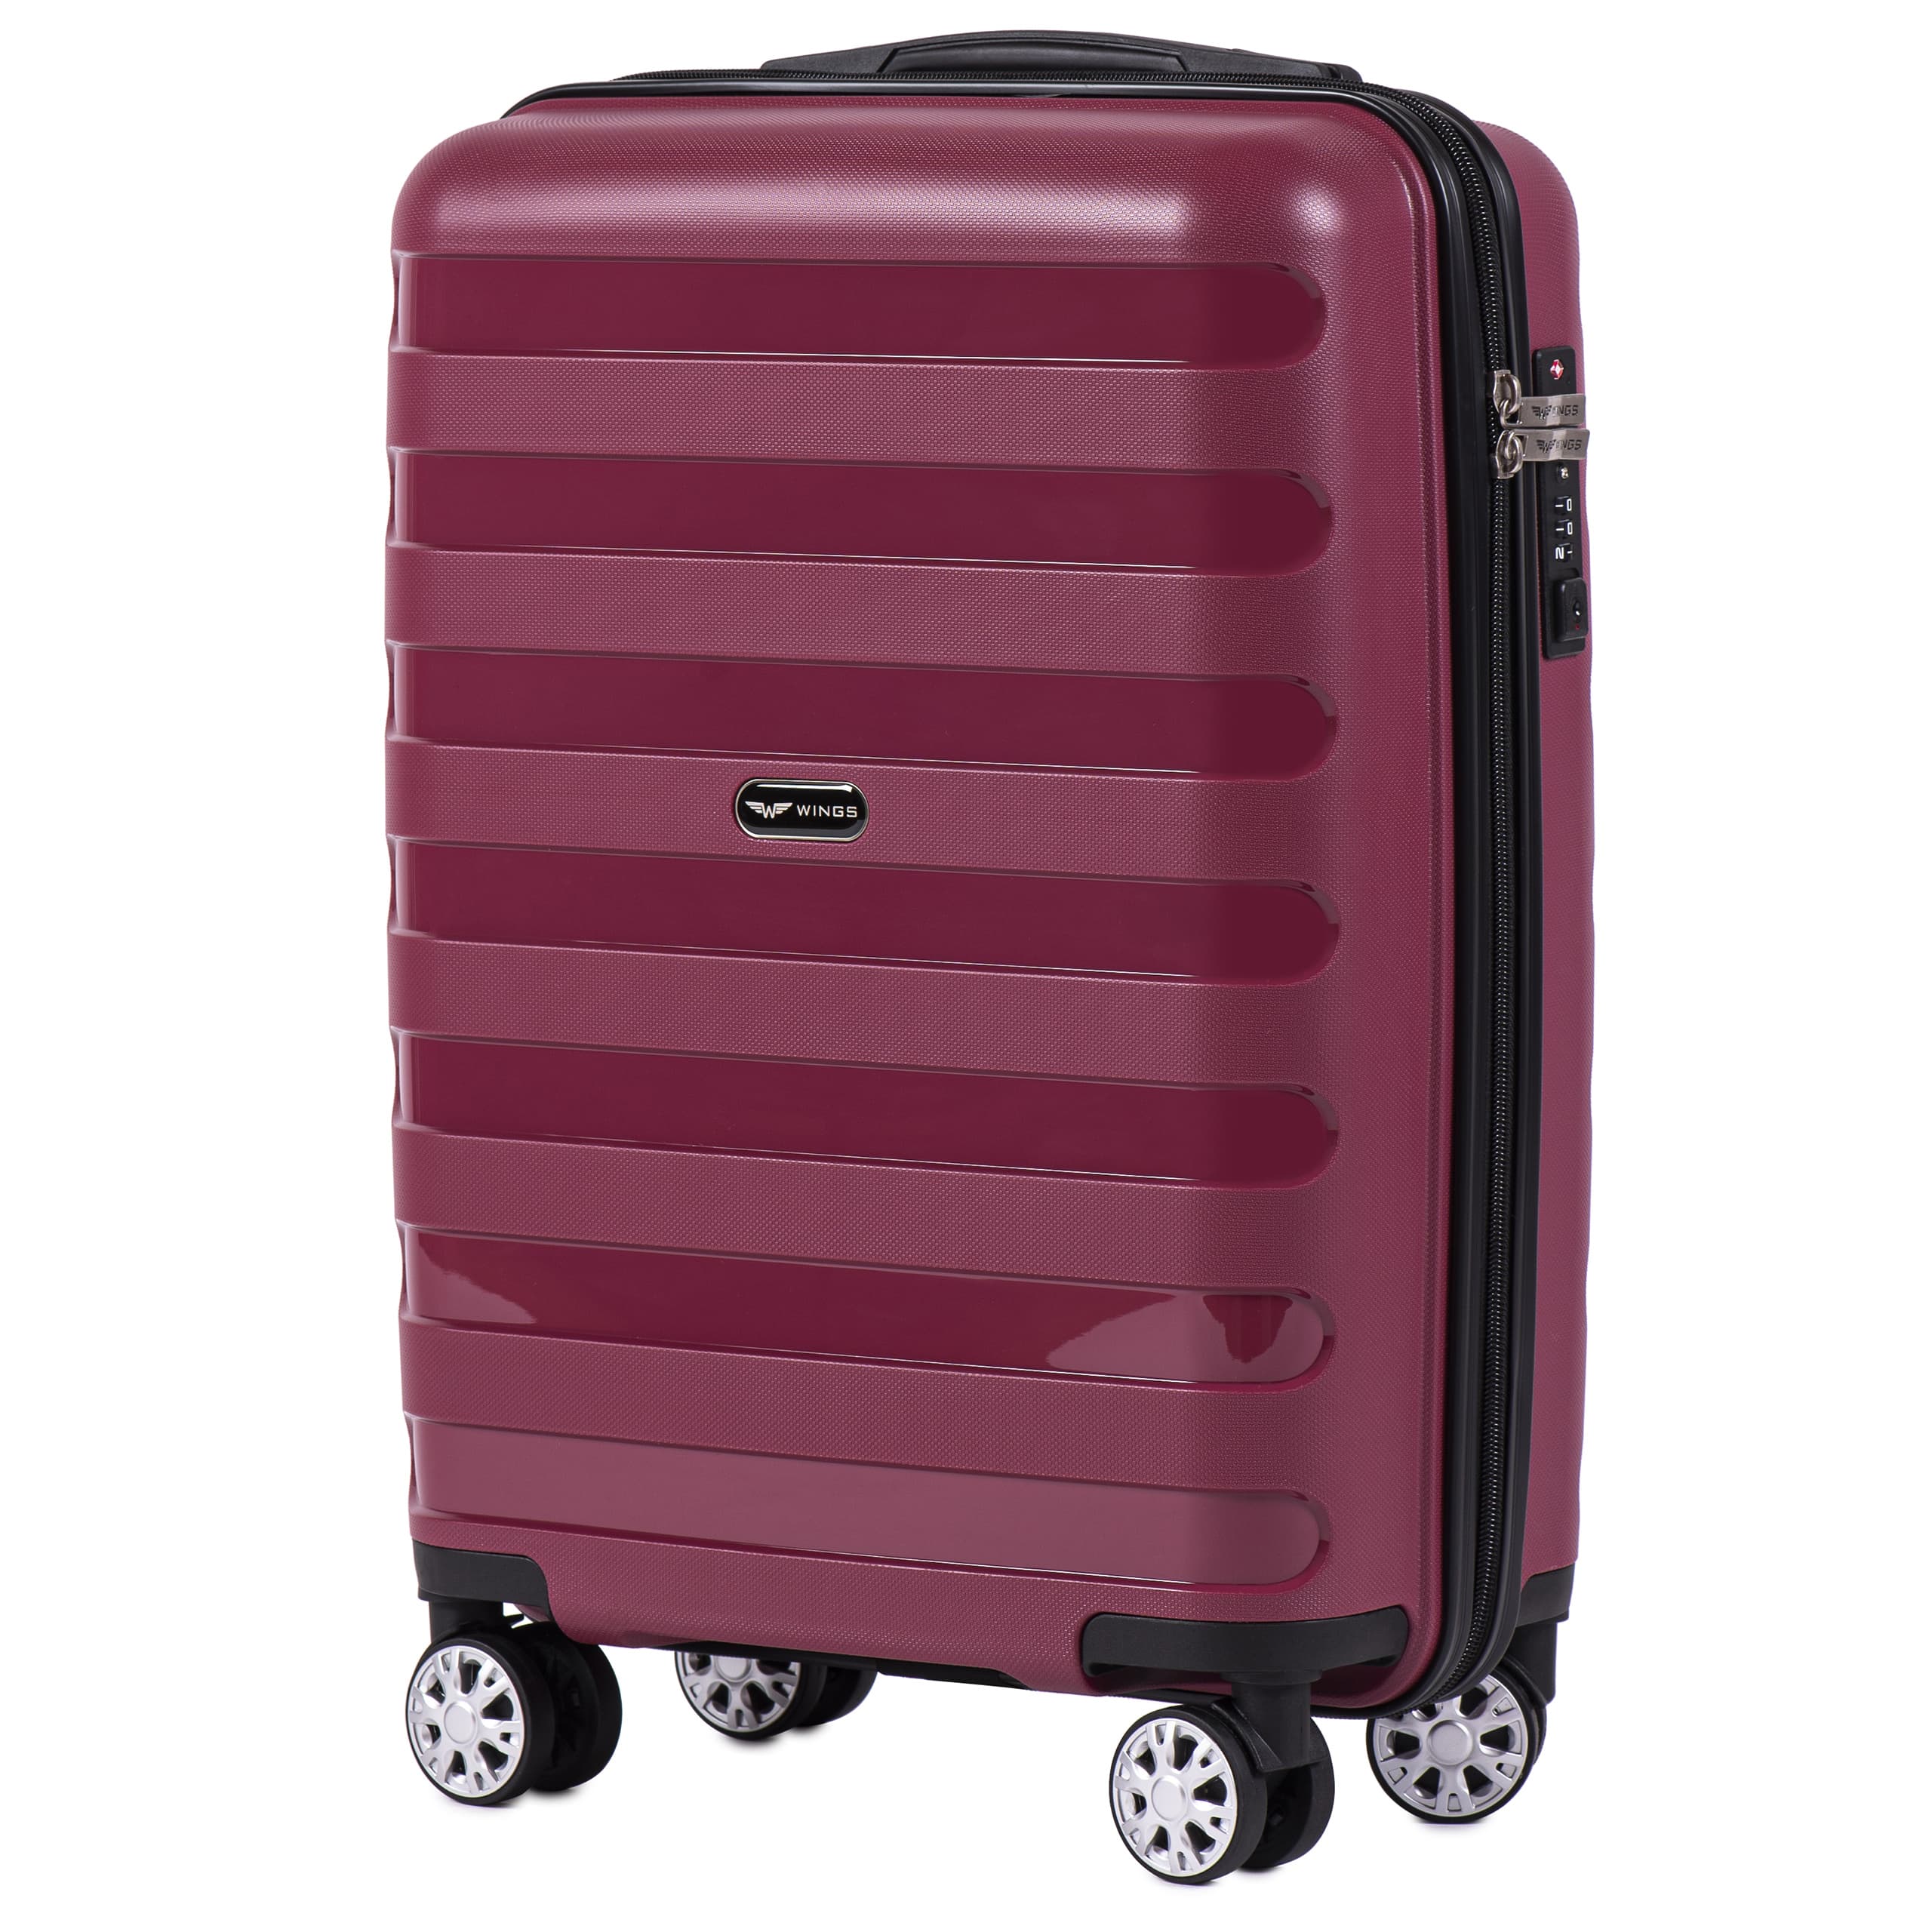 Маленький чемодан для ручной клади WINGS Prime S PP-07 Red! ДЛЯ 7-10 кг! - 3